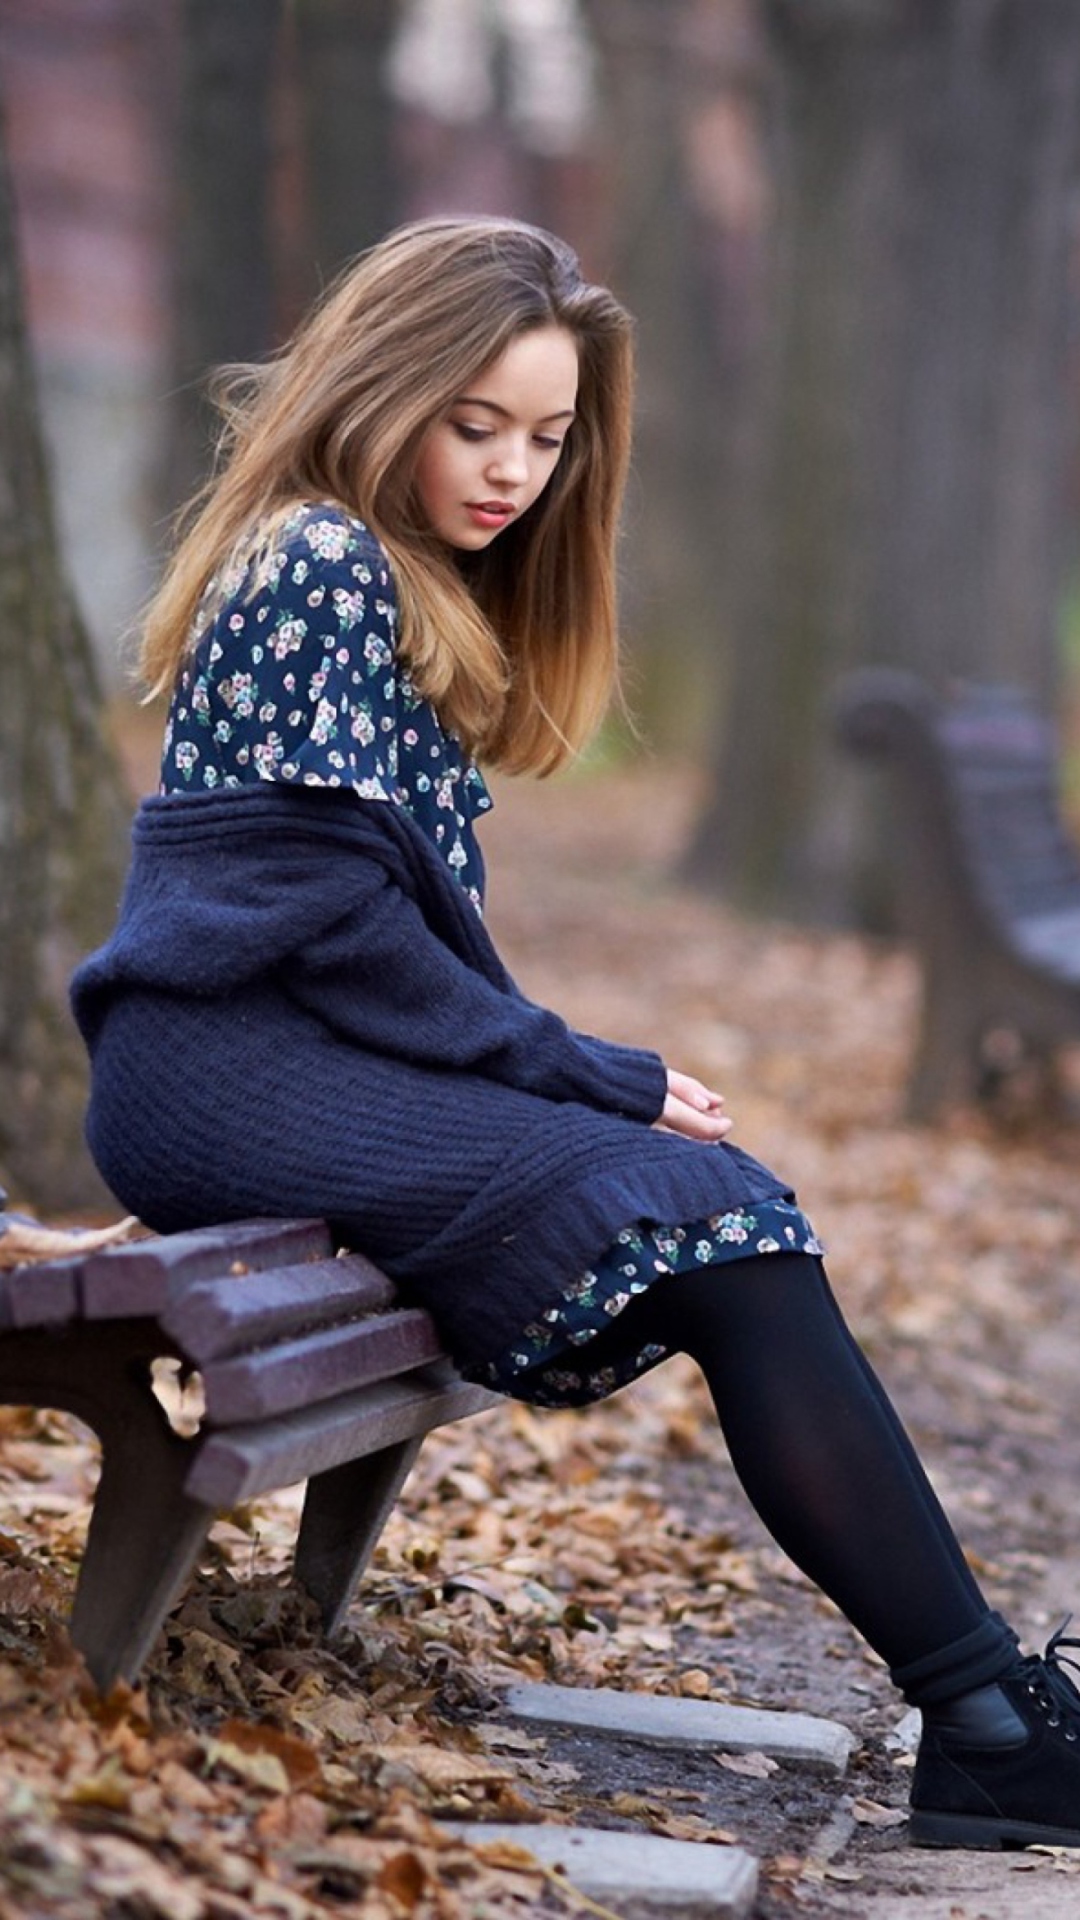 Beautiful Girl Sitting On Bench In Autumn Park screenshot #1 1080x1920